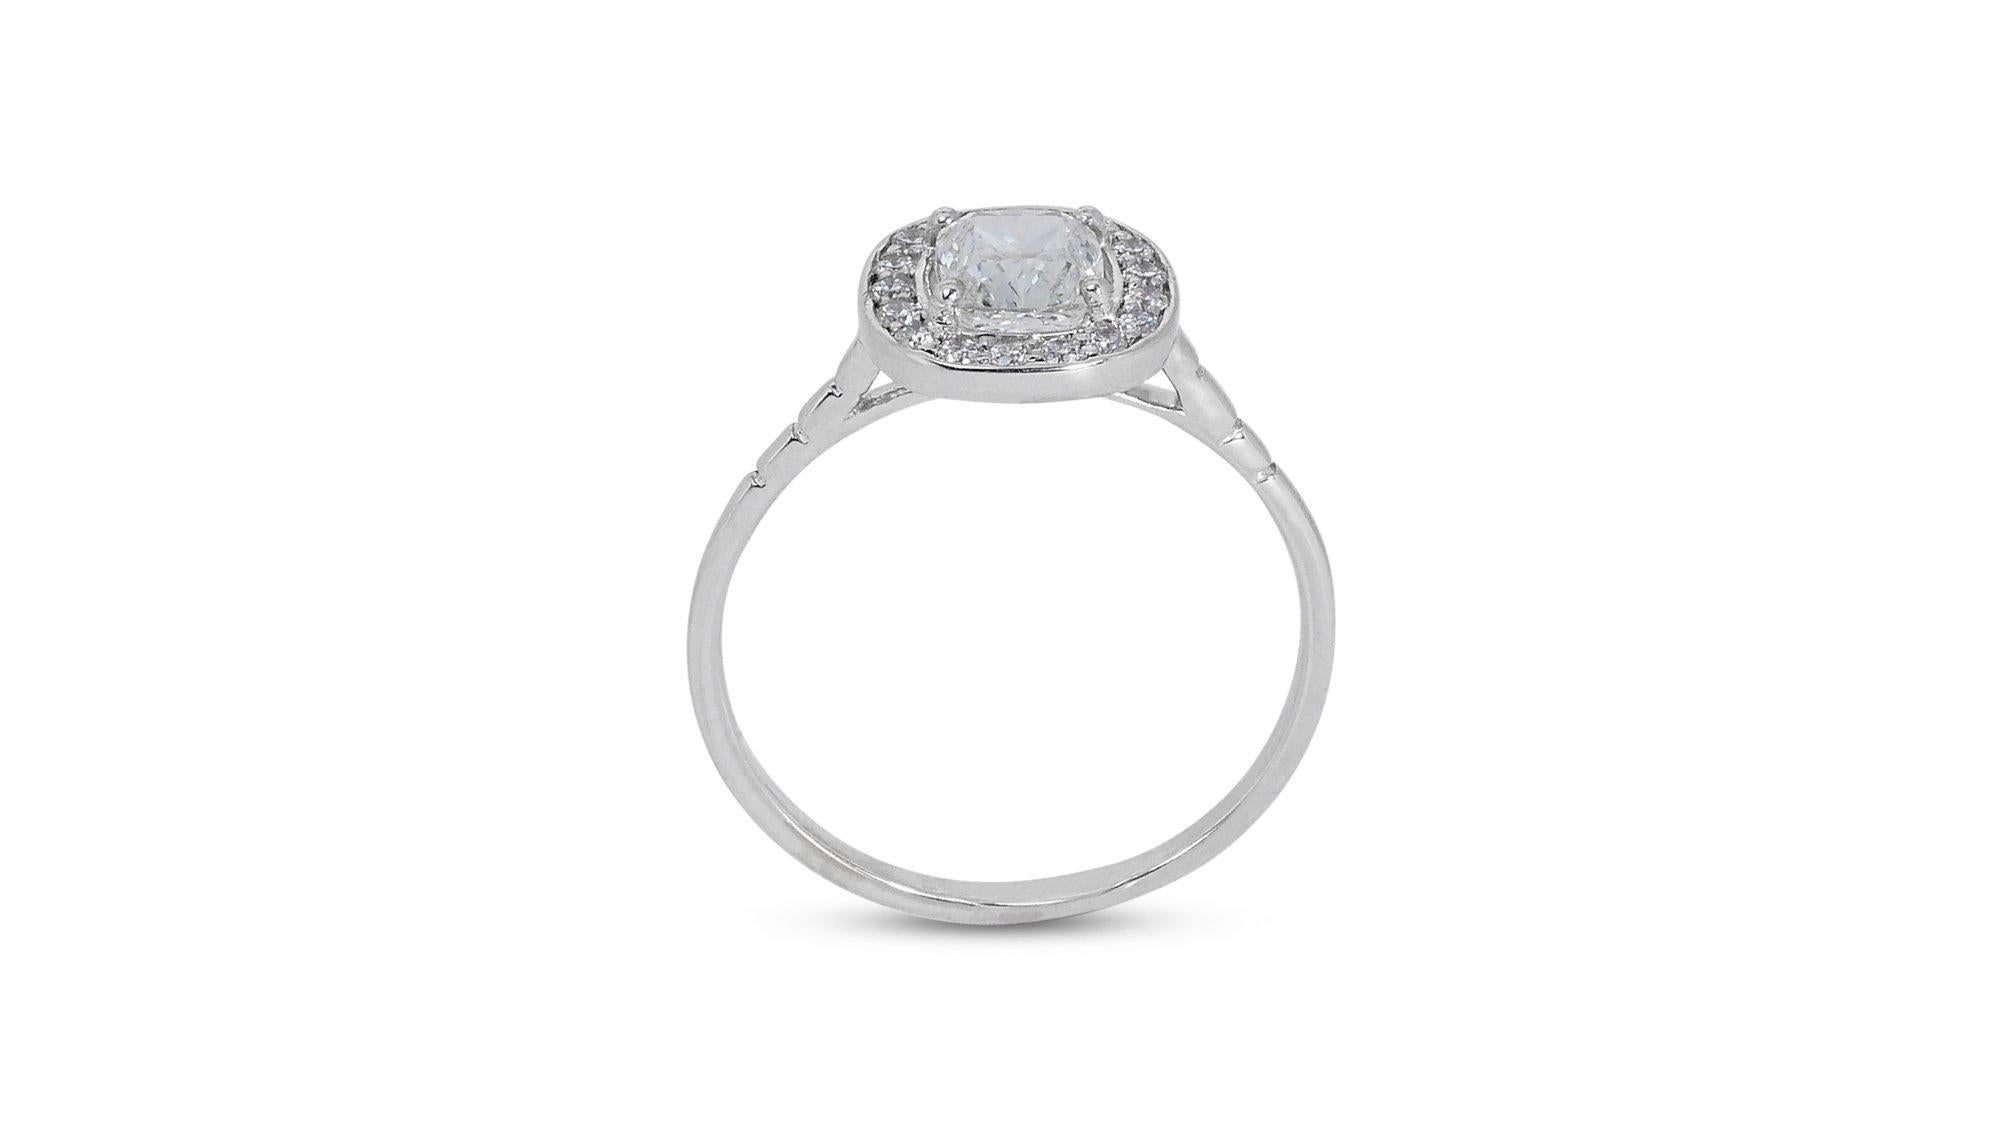 Elegant 1.17ct Diamonds Halo Ring in 18k White Gold - GIA Certified For Sale 1